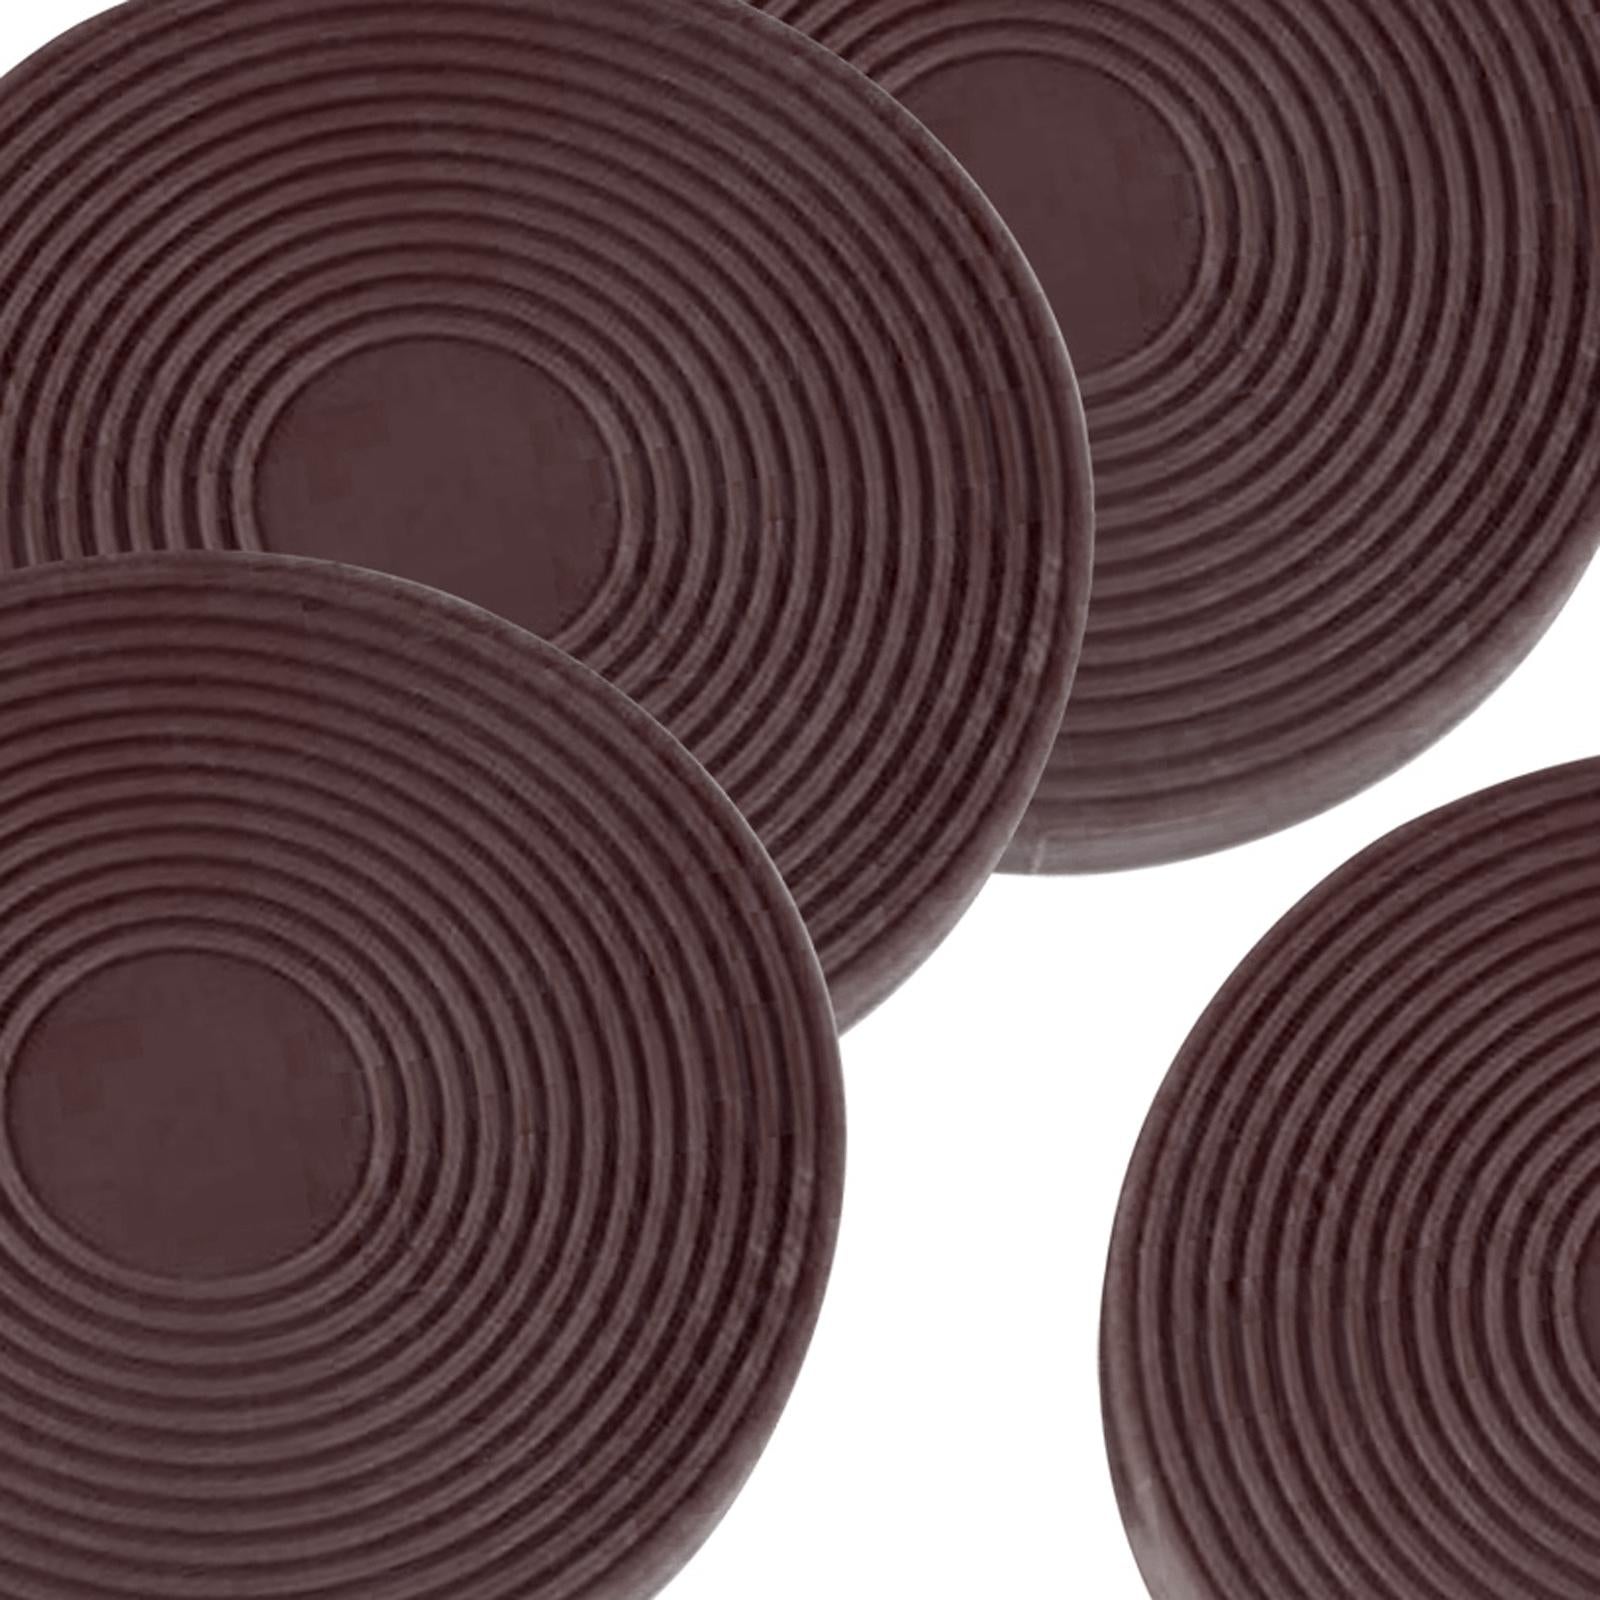 Anti-Slip Furniture Gripper Cups Round Coasters 43mm for Sofa Bed Pianos Dark Brown